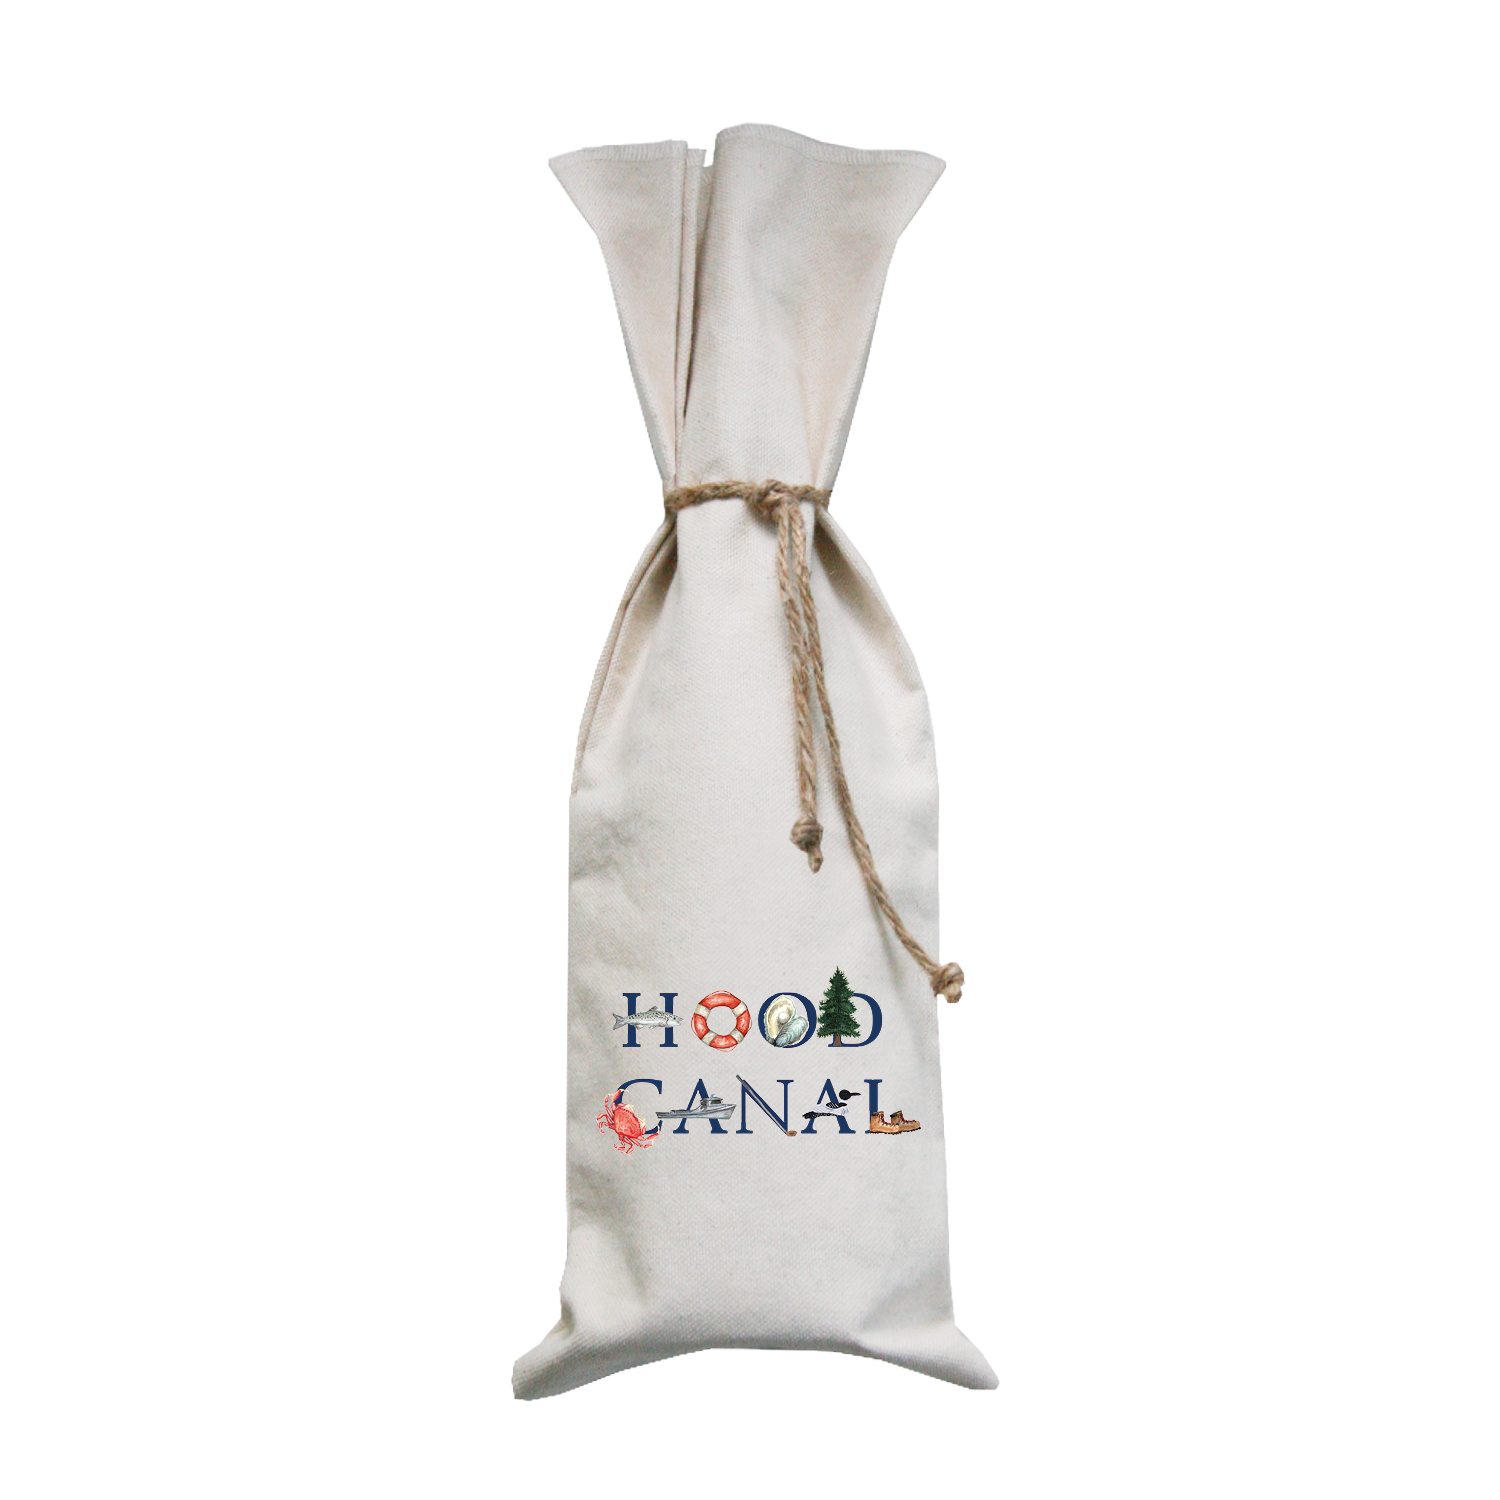 hood canal wine bag